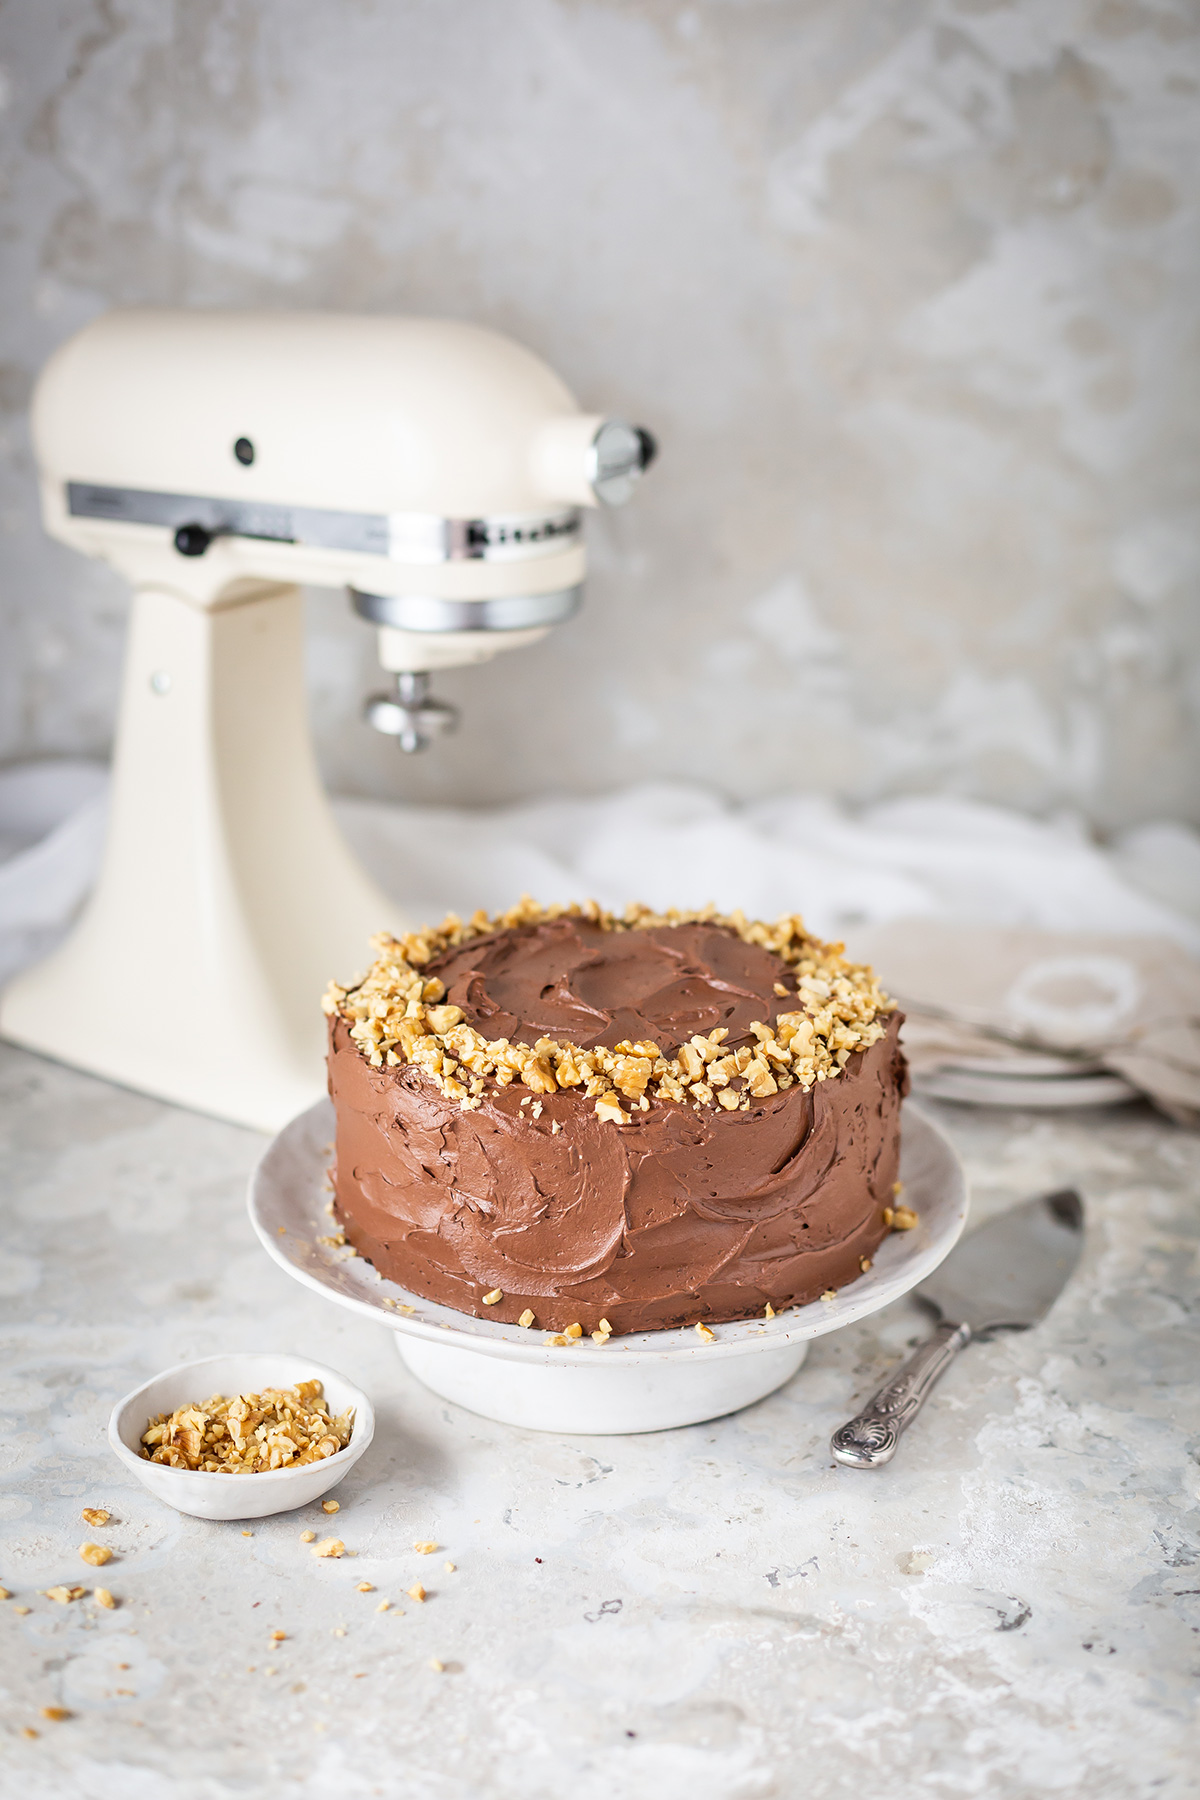 The best chocolate cake by Ina Garten